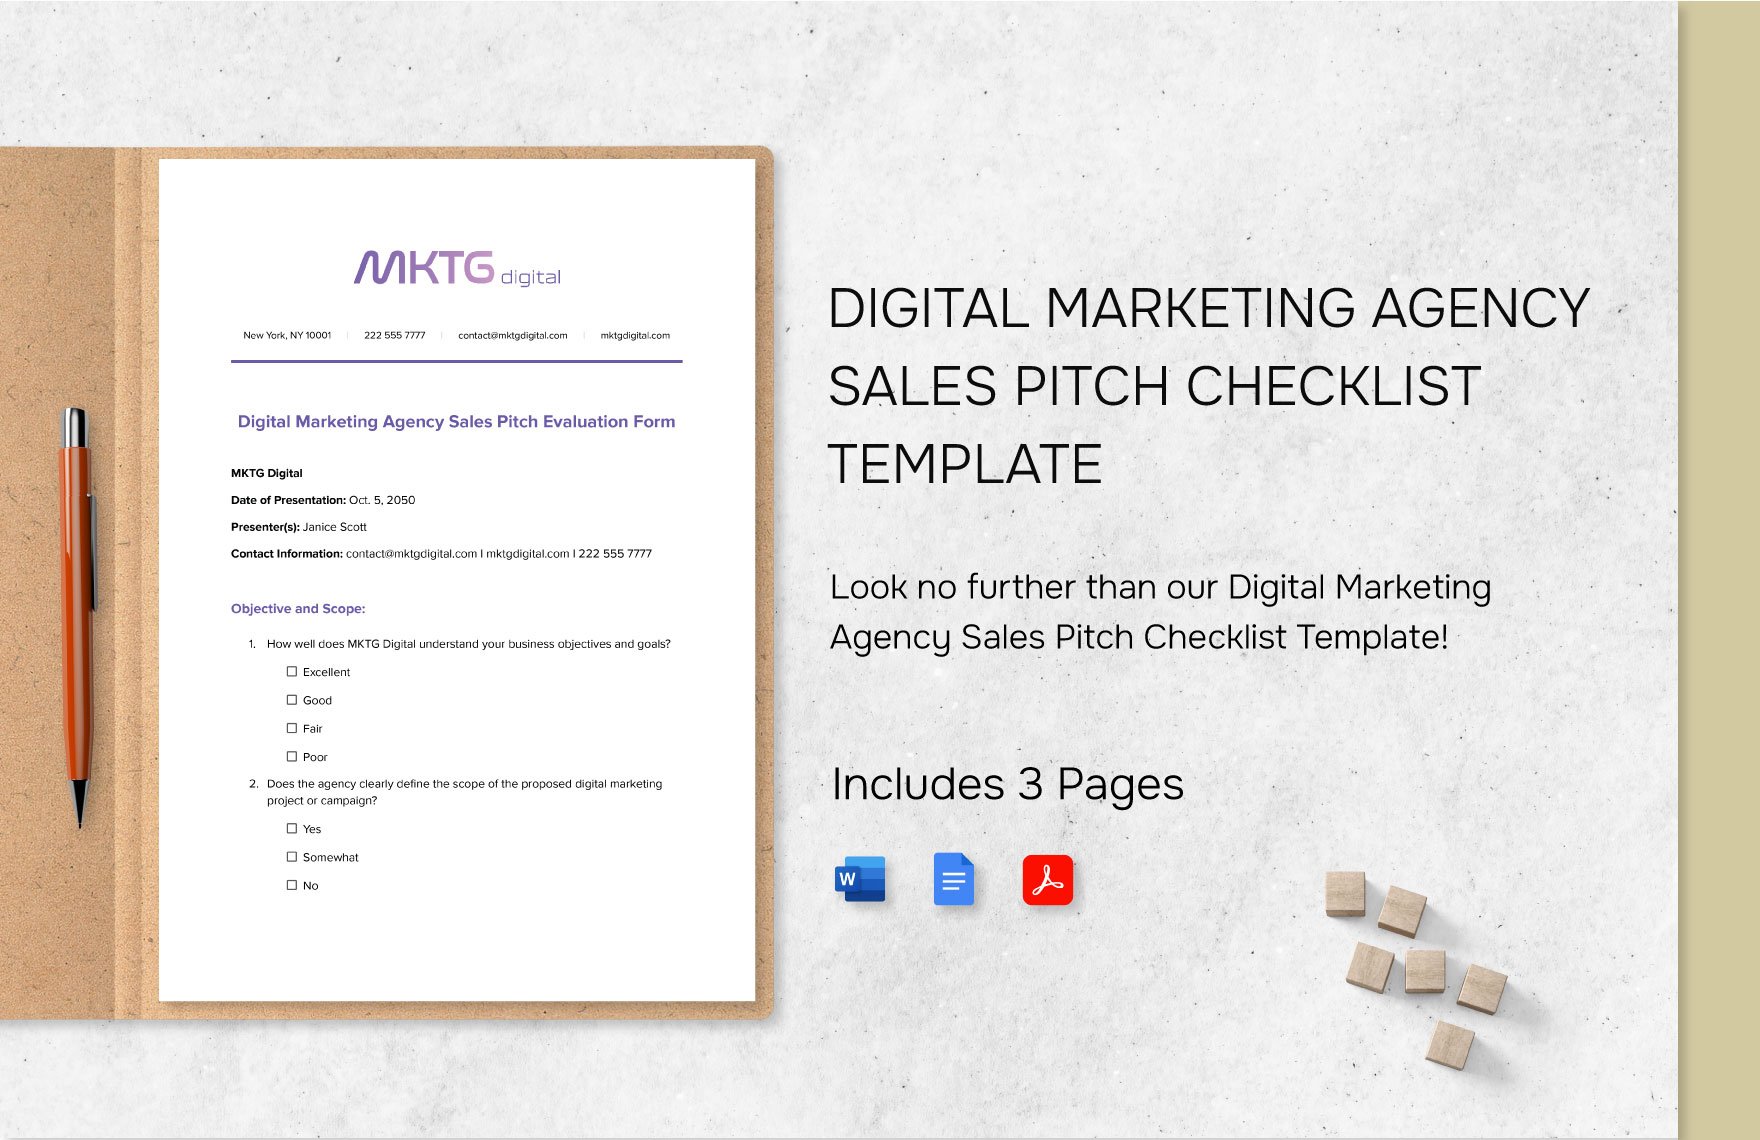 Digital Marketing Agency Sales Pitch Checklist Template in Word, Google Docs, PDF